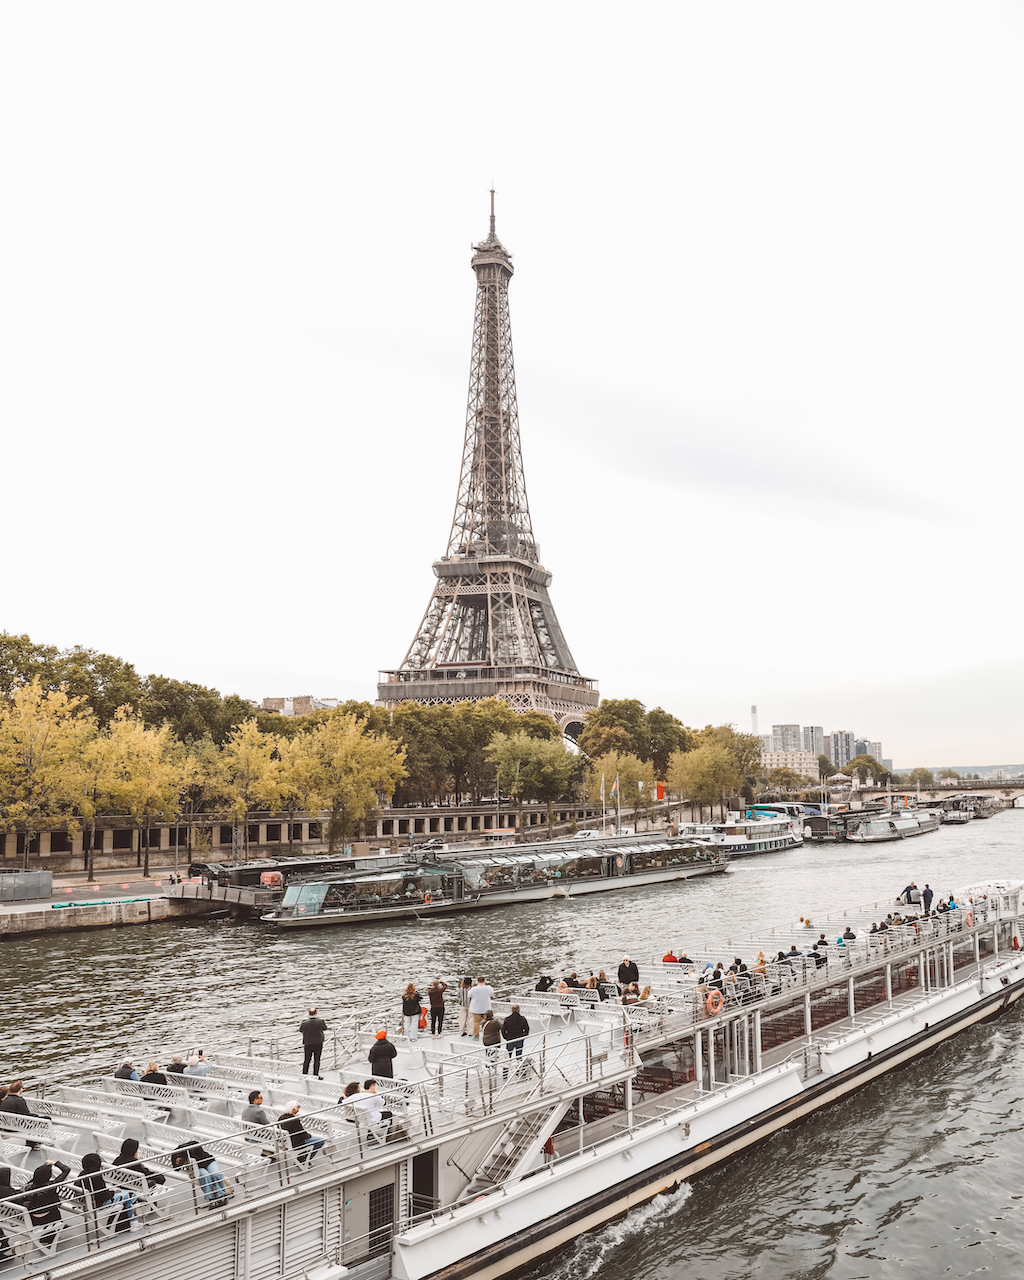 Eiffel Tower view behind the Seine River - Paris - France